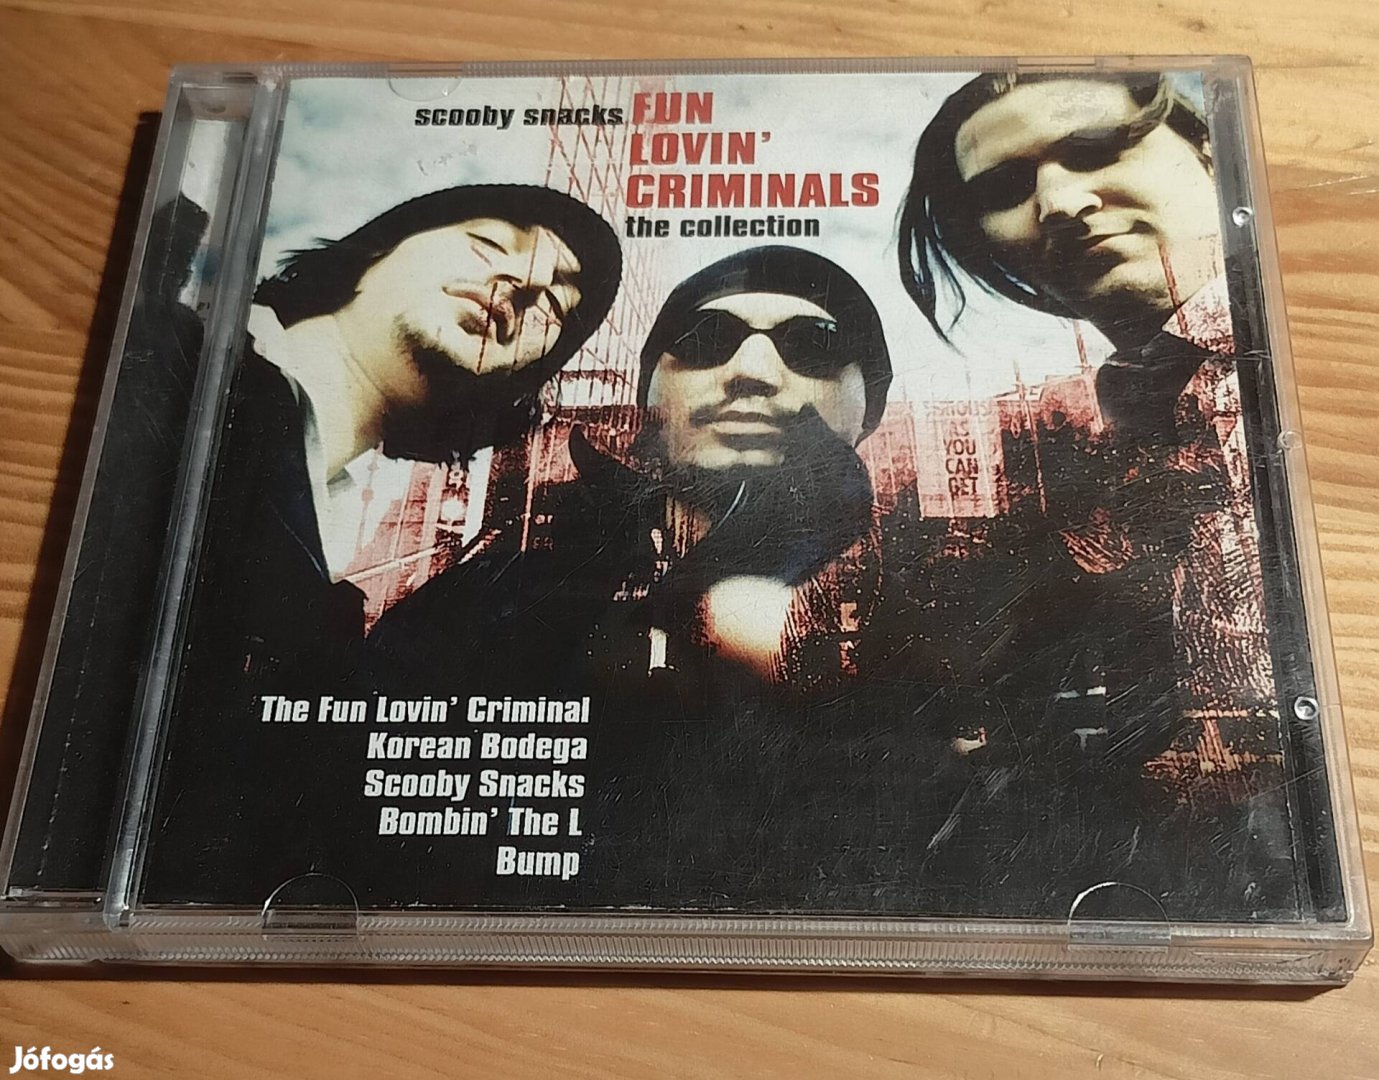 Fun Lovin' Criminals - The collection CD